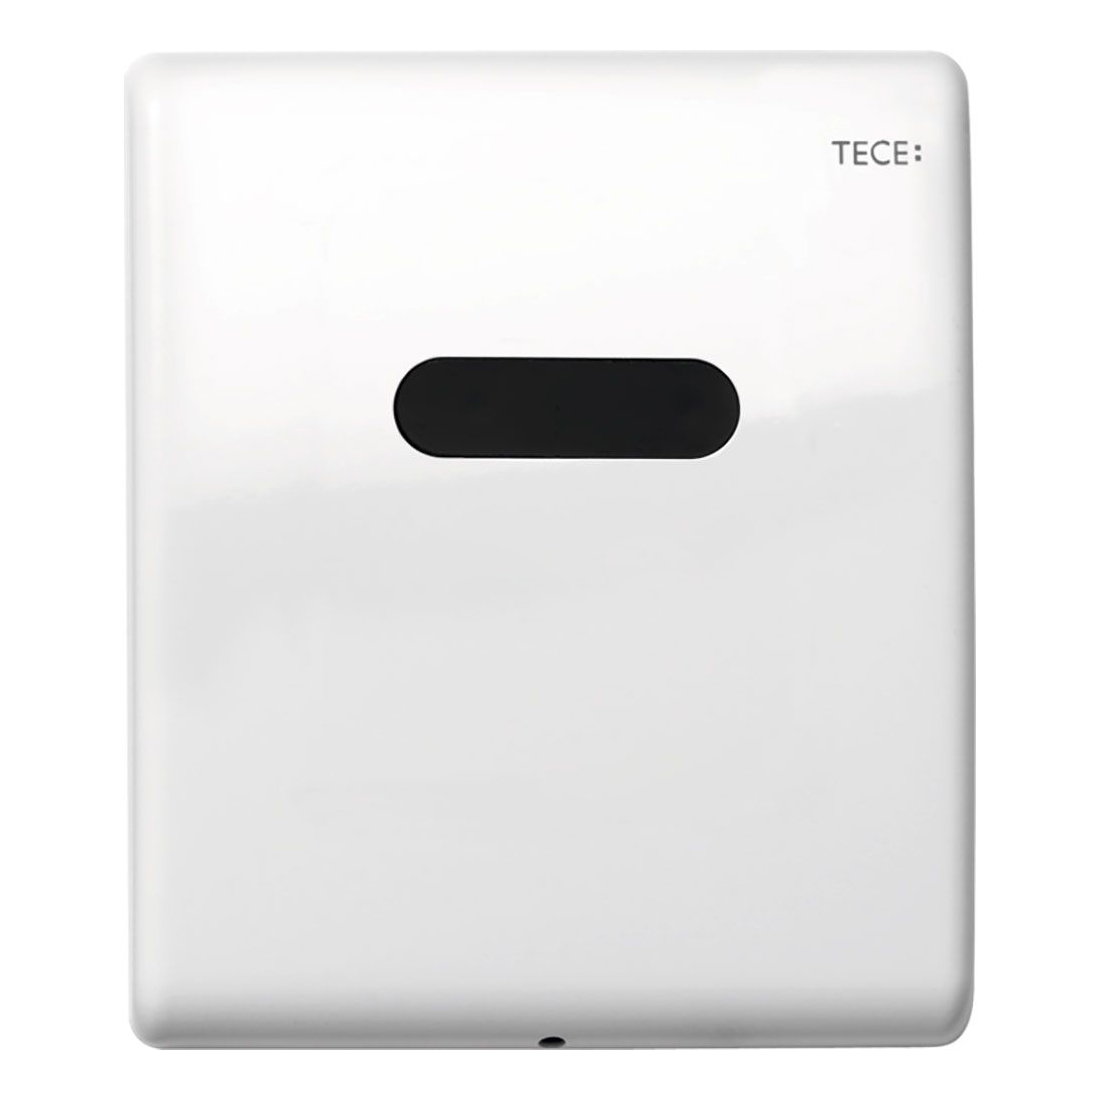 Кнопка для инсталляции Tece TECEplanus Urinal 9242356, 6 V батарея, белая глянцевая кнопка для инсталляции tece teceplanus 9240312 белый матовый